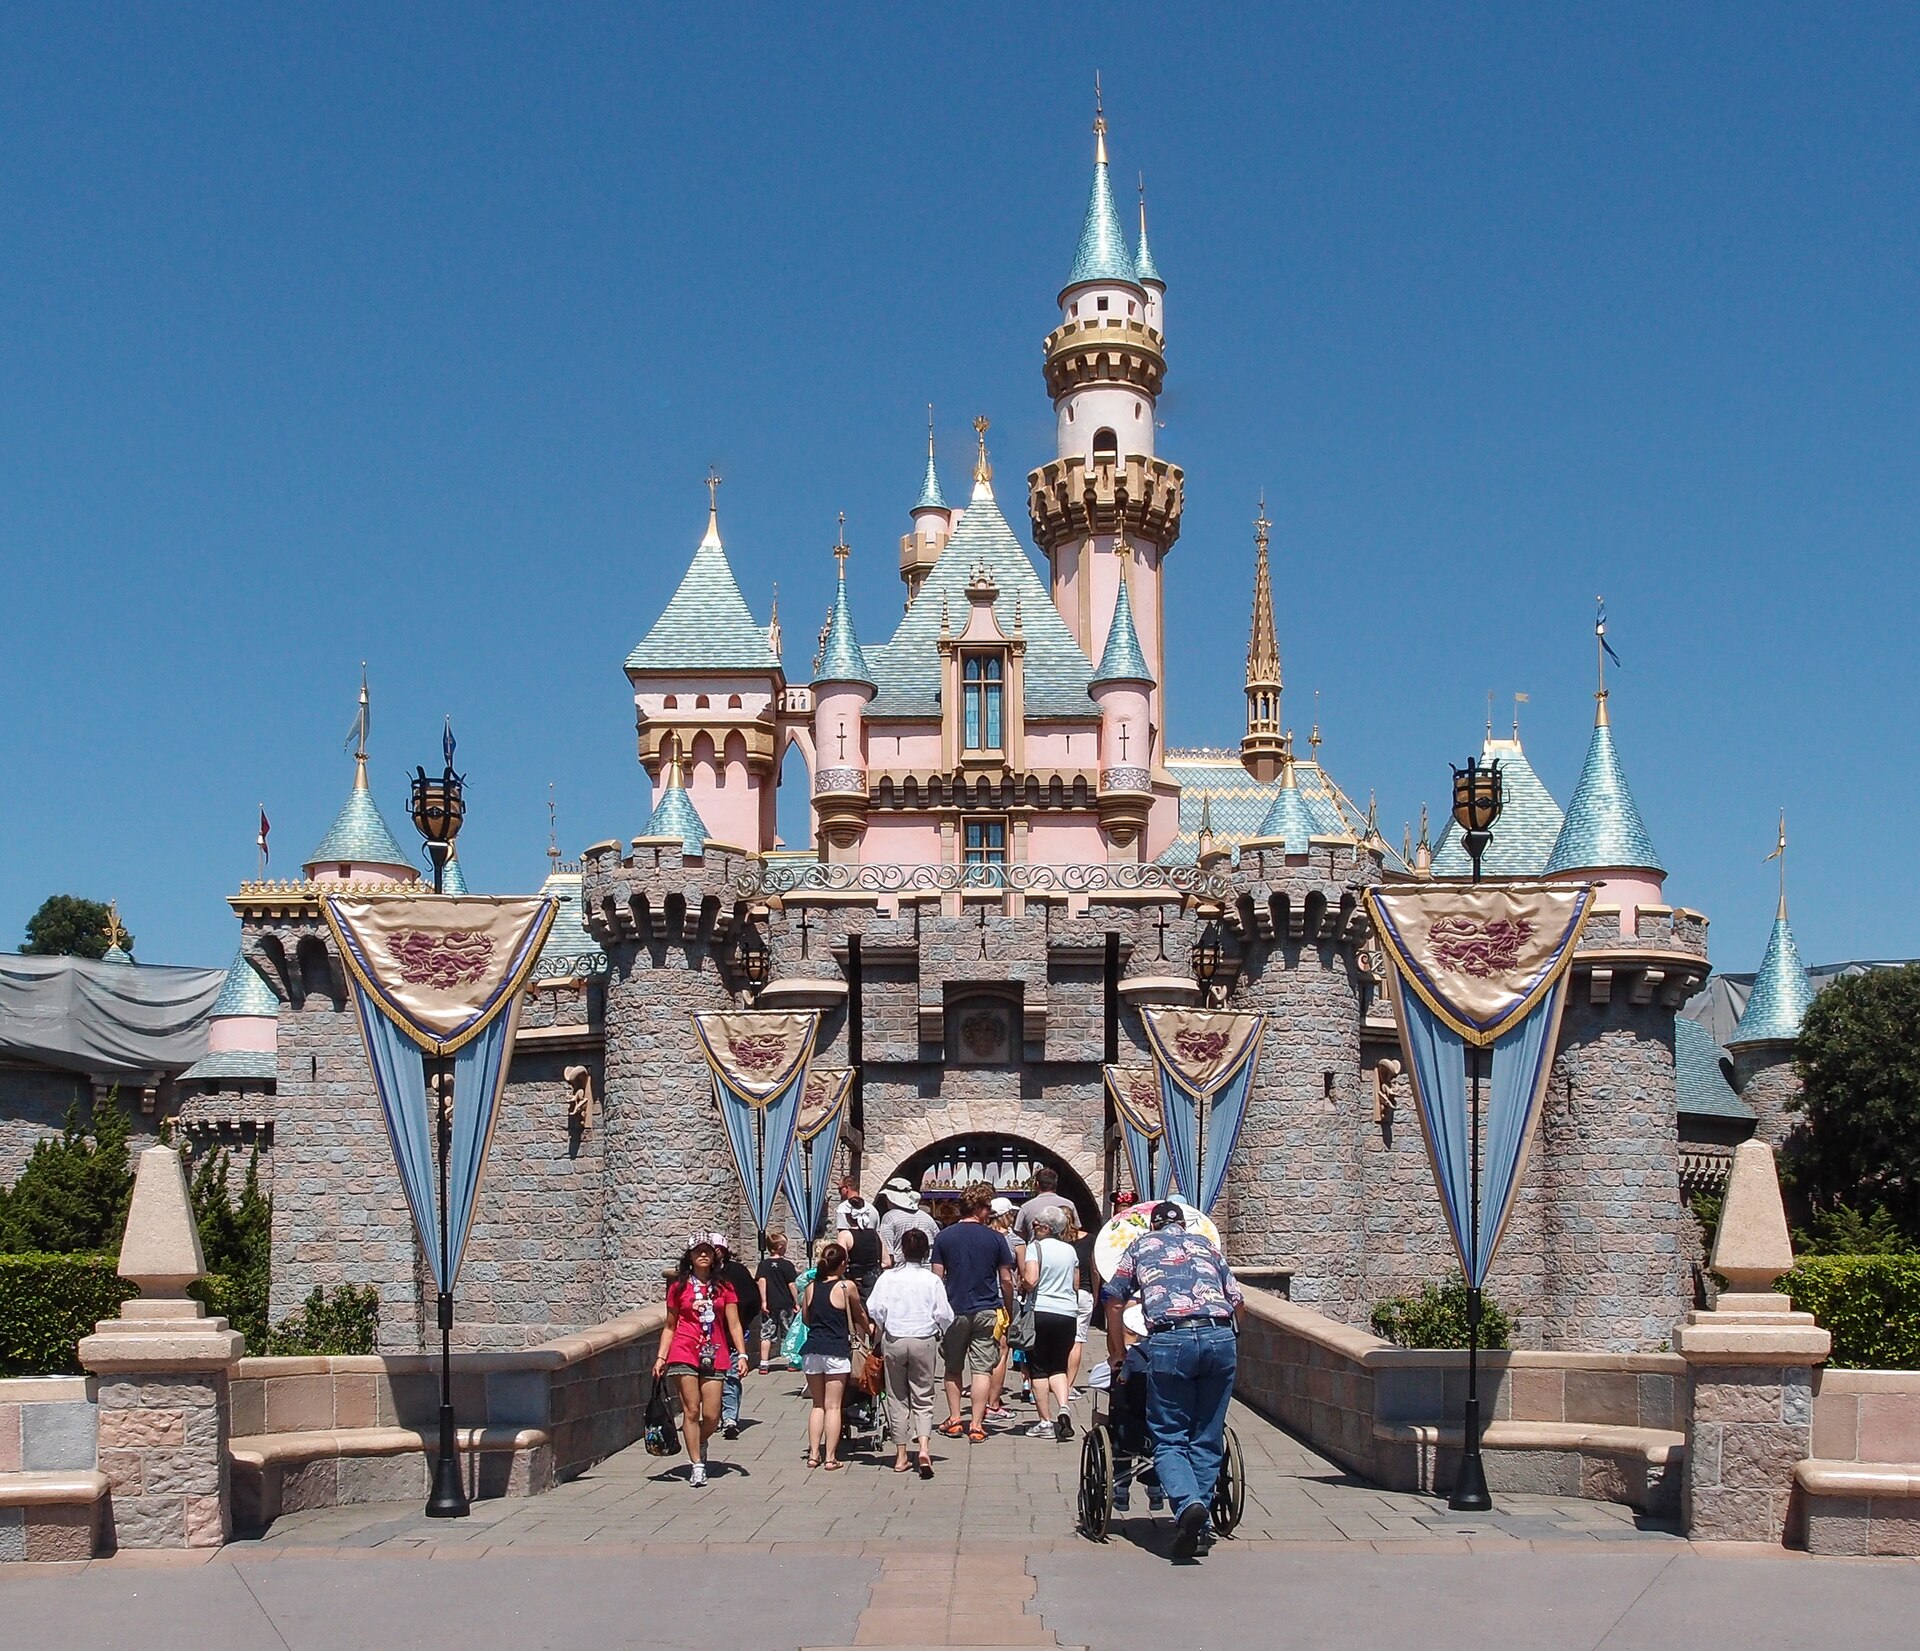 Disneyland Wikipedia